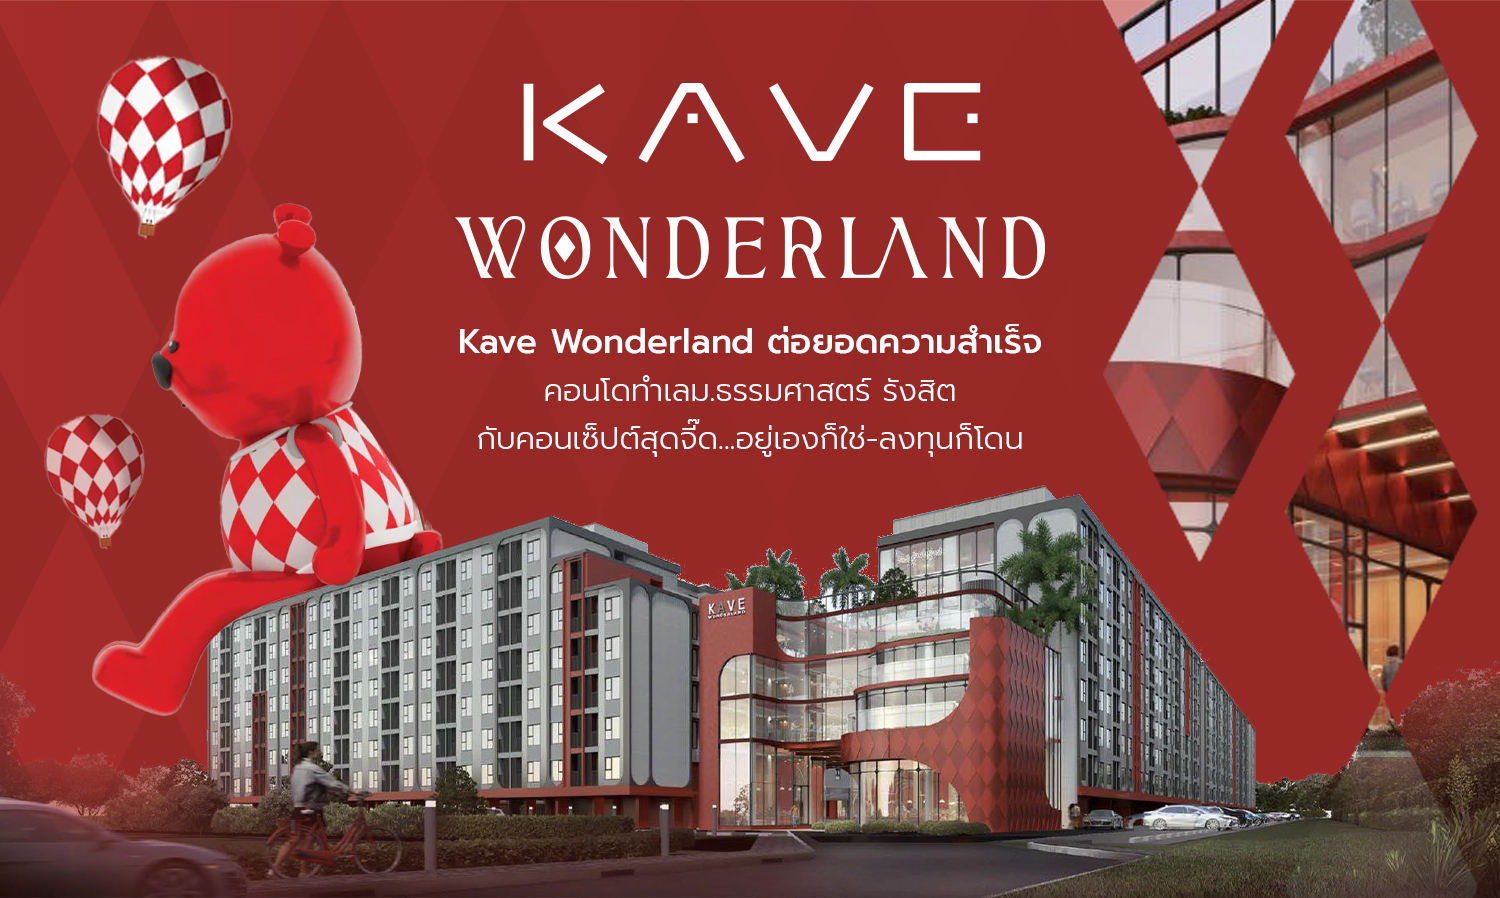 Kave Wonderland ต่อยอดความสำเร็จ คอนโดทำเล ม.ธรรมศาสตร์ รังสิต กับคอนเซ็ปต์สุดจี๊ด...อยู่เองก็ใช่-ลงทุนก็โดน